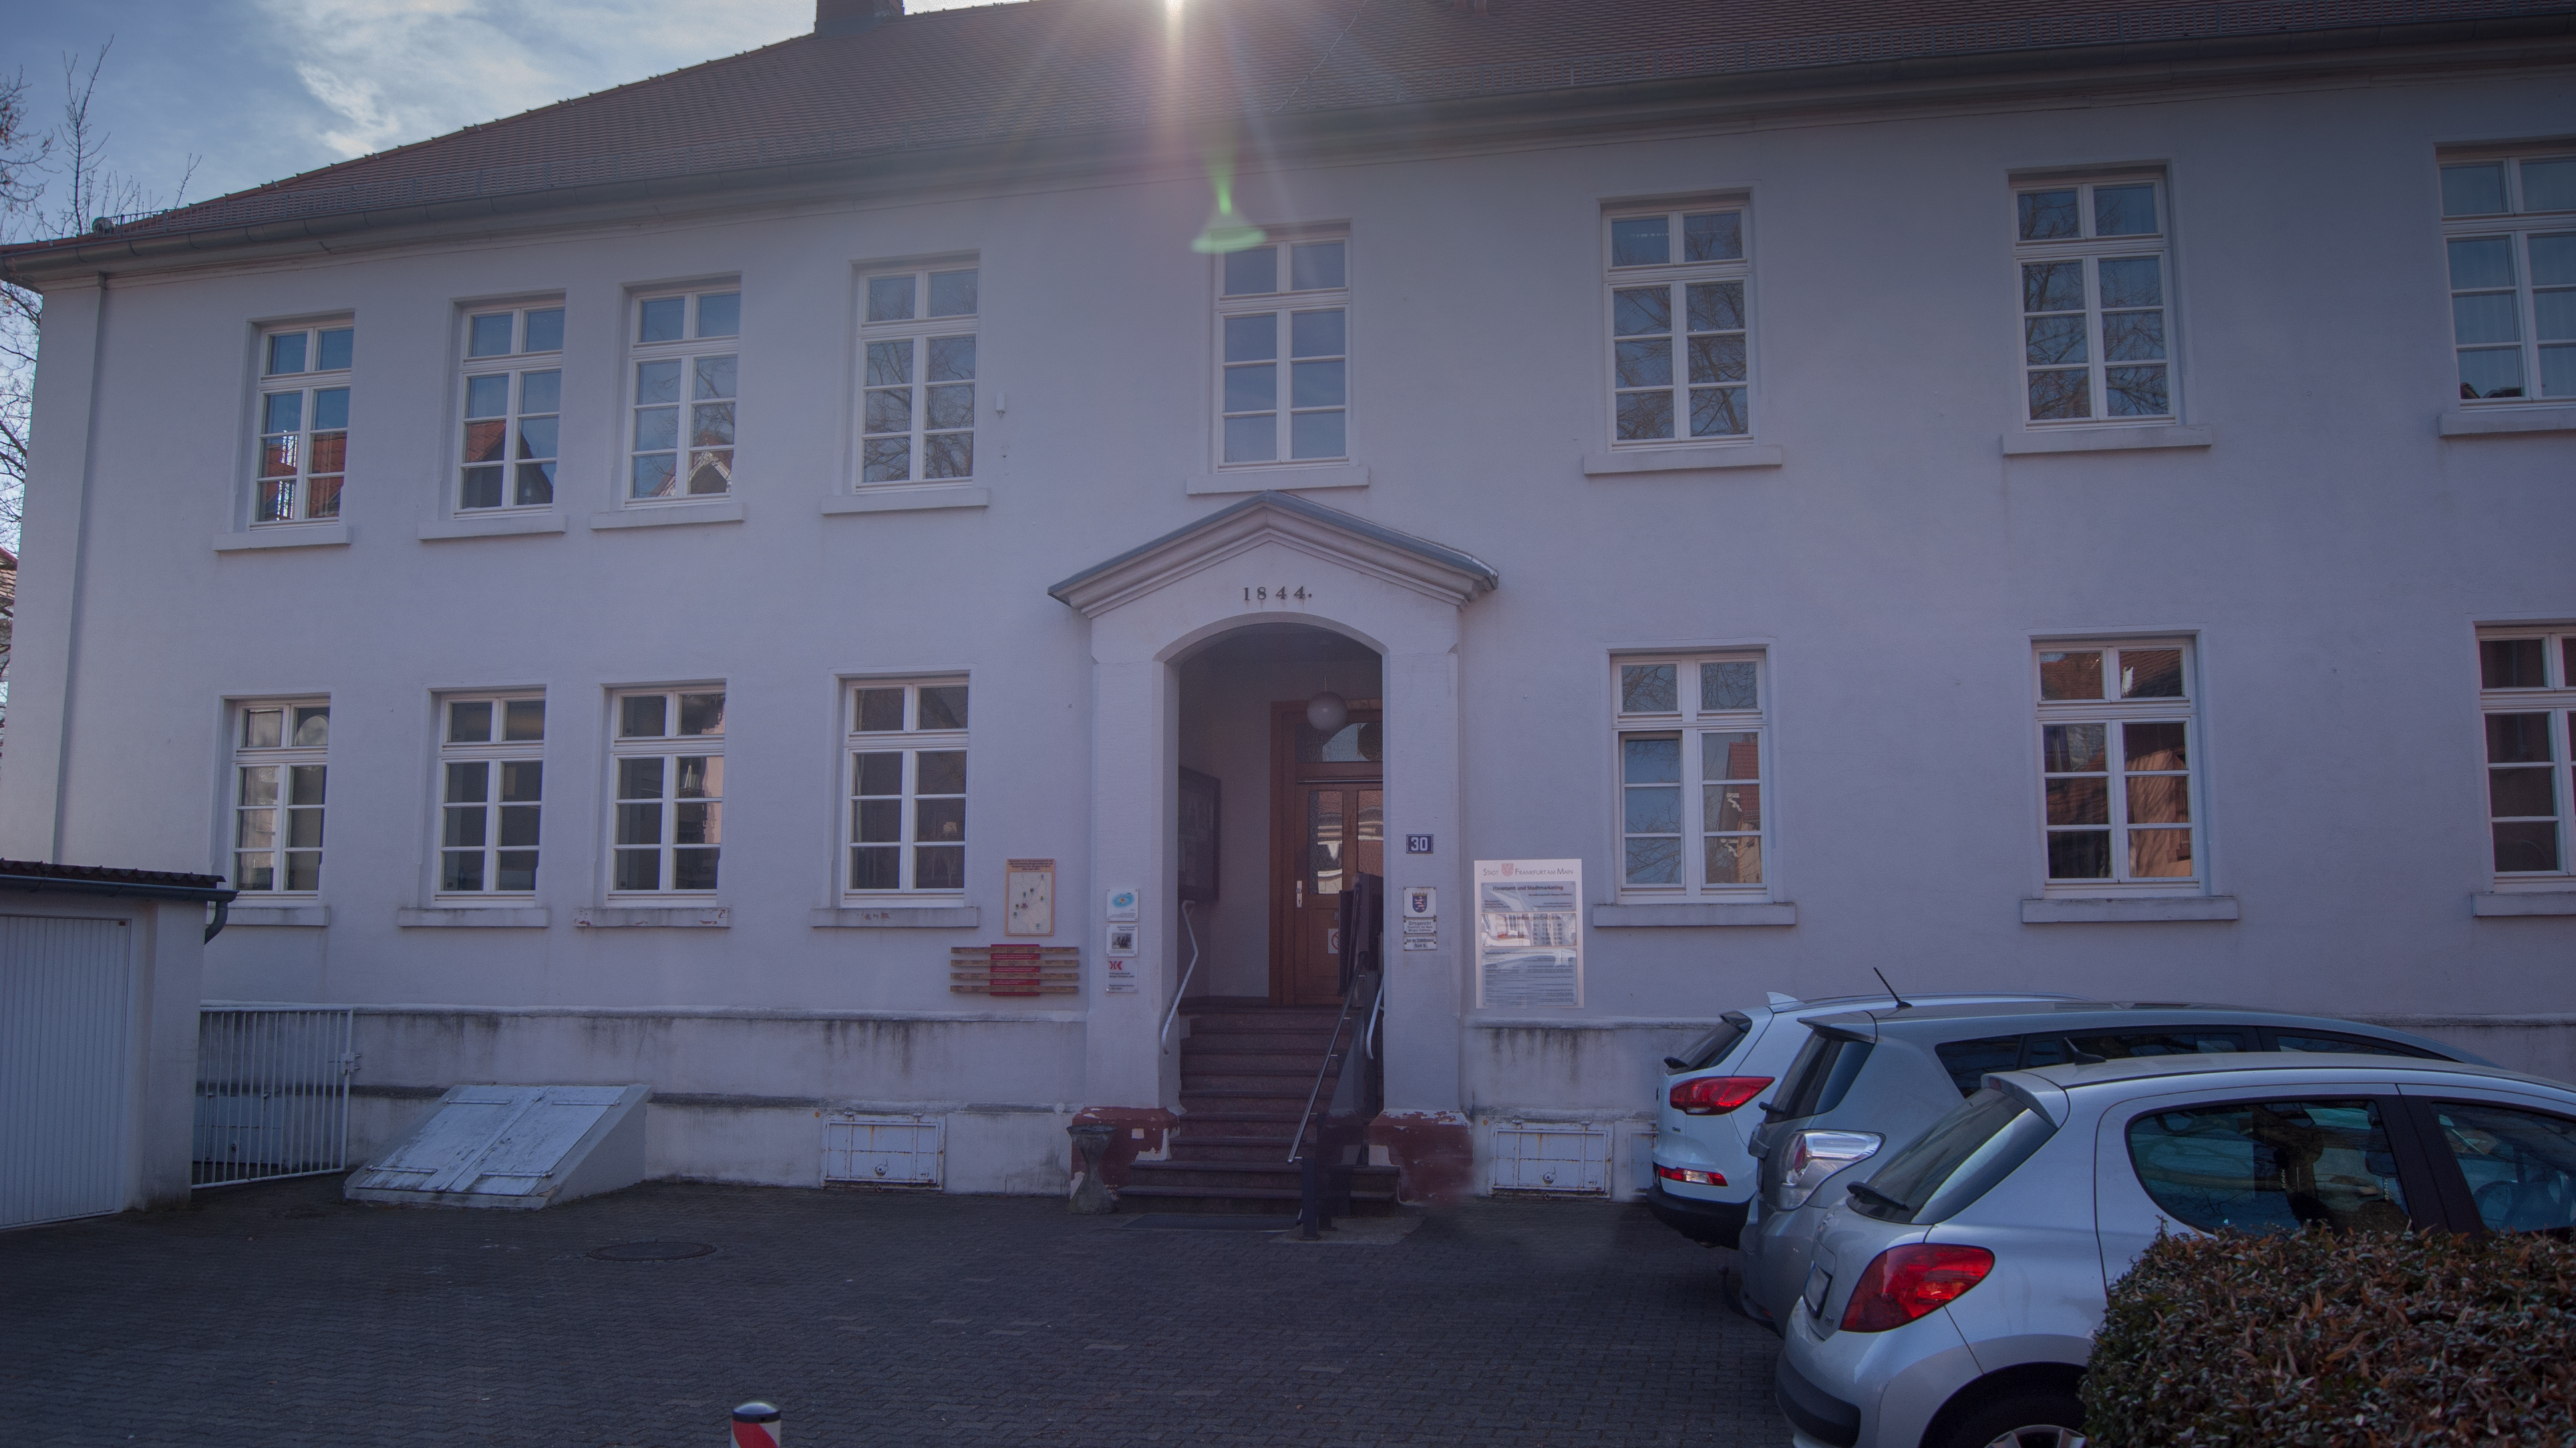 Citizens Registration Office Bergen-Enkheim (Bürgeramt Bergen-Enkheim), Photo: Peter Stumpf